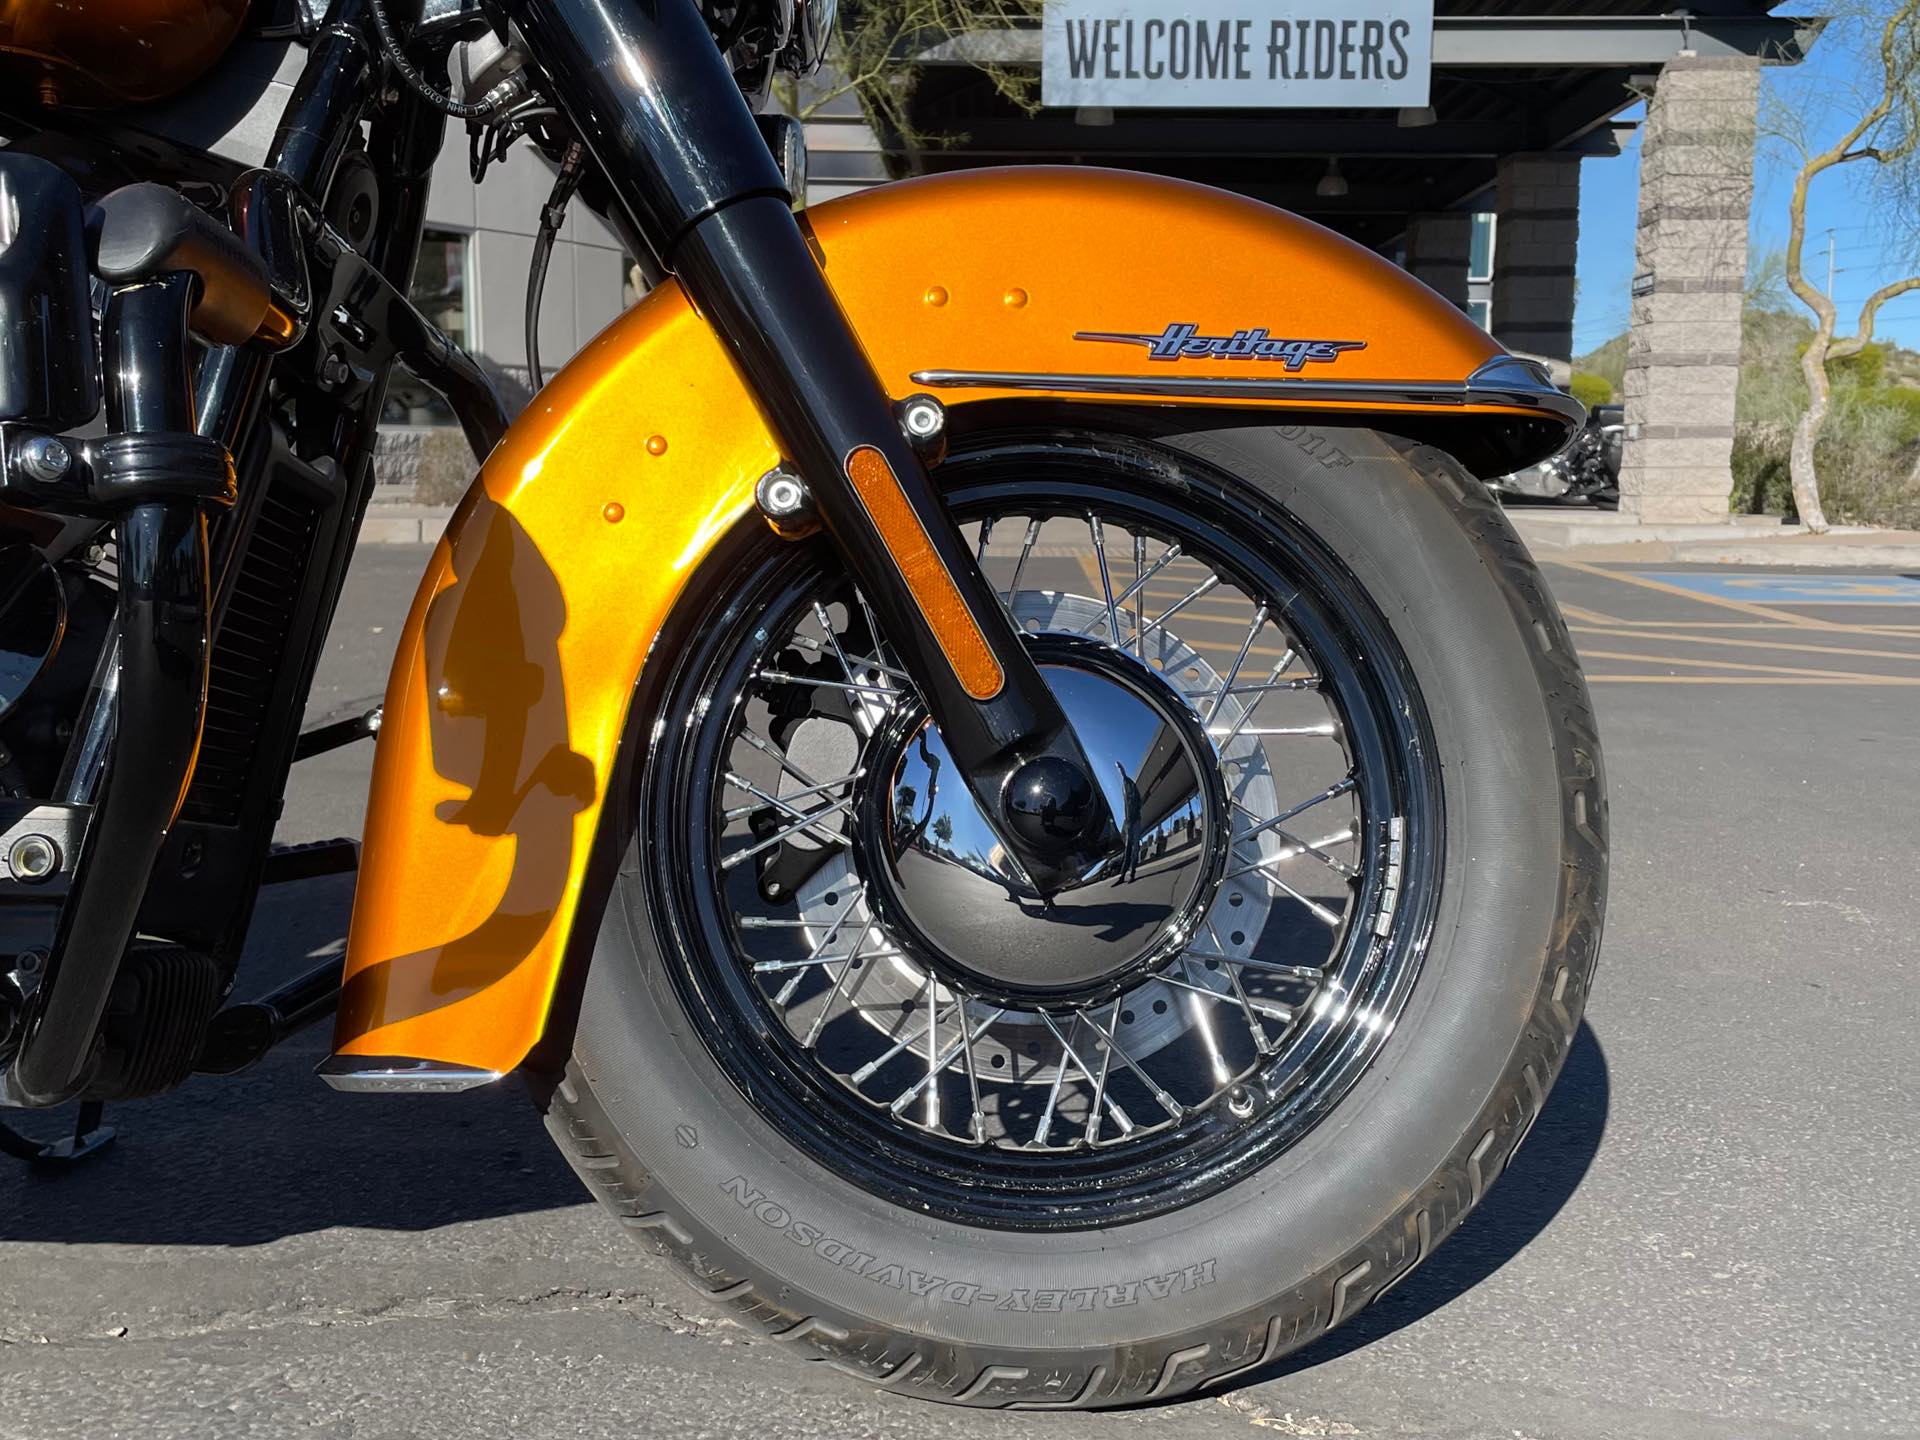 2019 Harley-Davidson Softail Heritage Classic at Buddy Stubbs Arizona Harley-Davidson